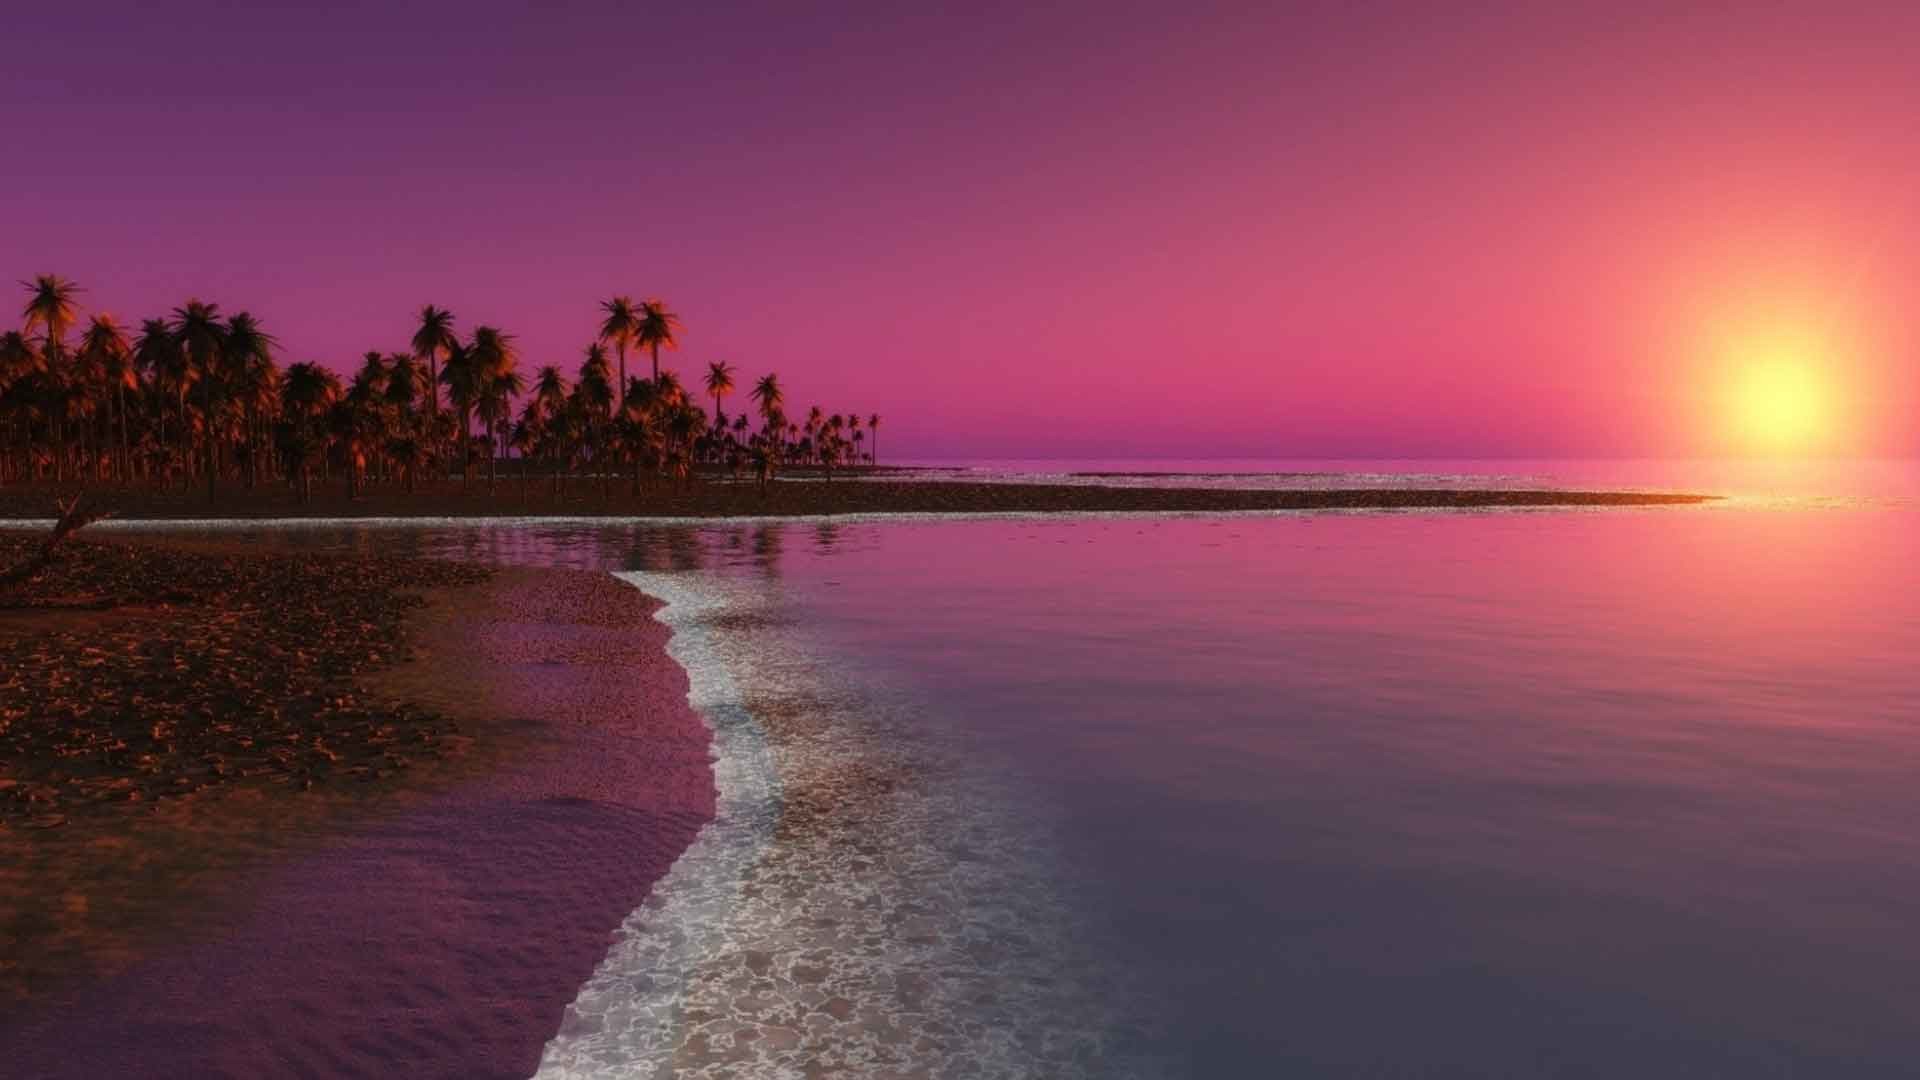 Sunrise Sunset Ocean Reflection Water Beach Hd Wallpapers - Nature Windows 10 Background - HD Wallpaper 